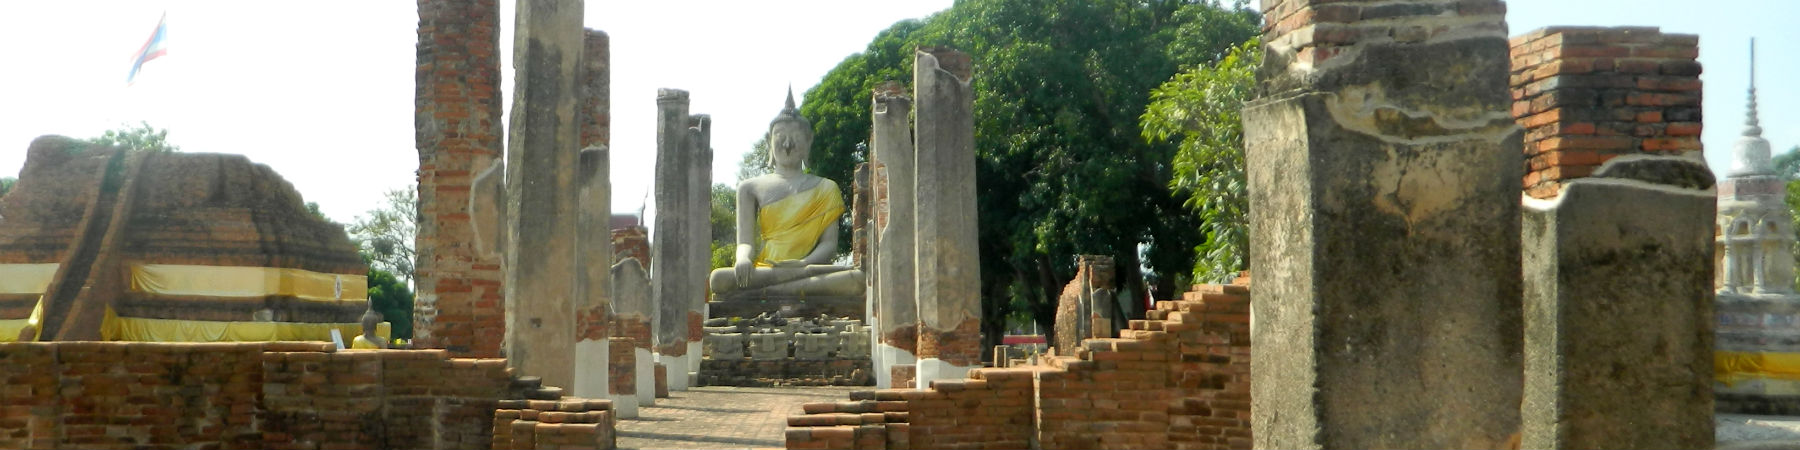 Wat Phra Mahathat, Sankhaburi District, Chainat Province